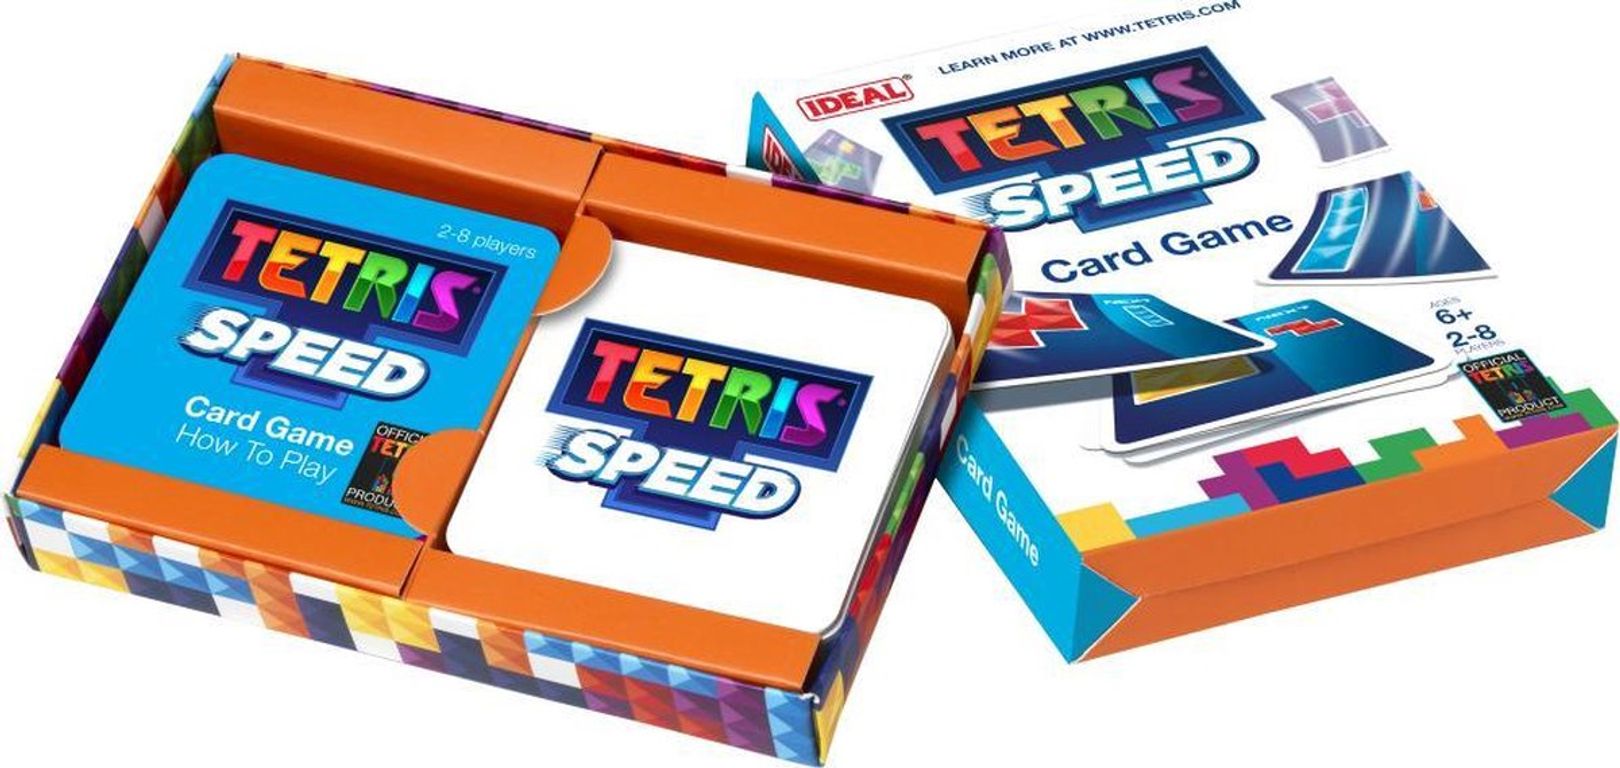 Tetris Speed composants